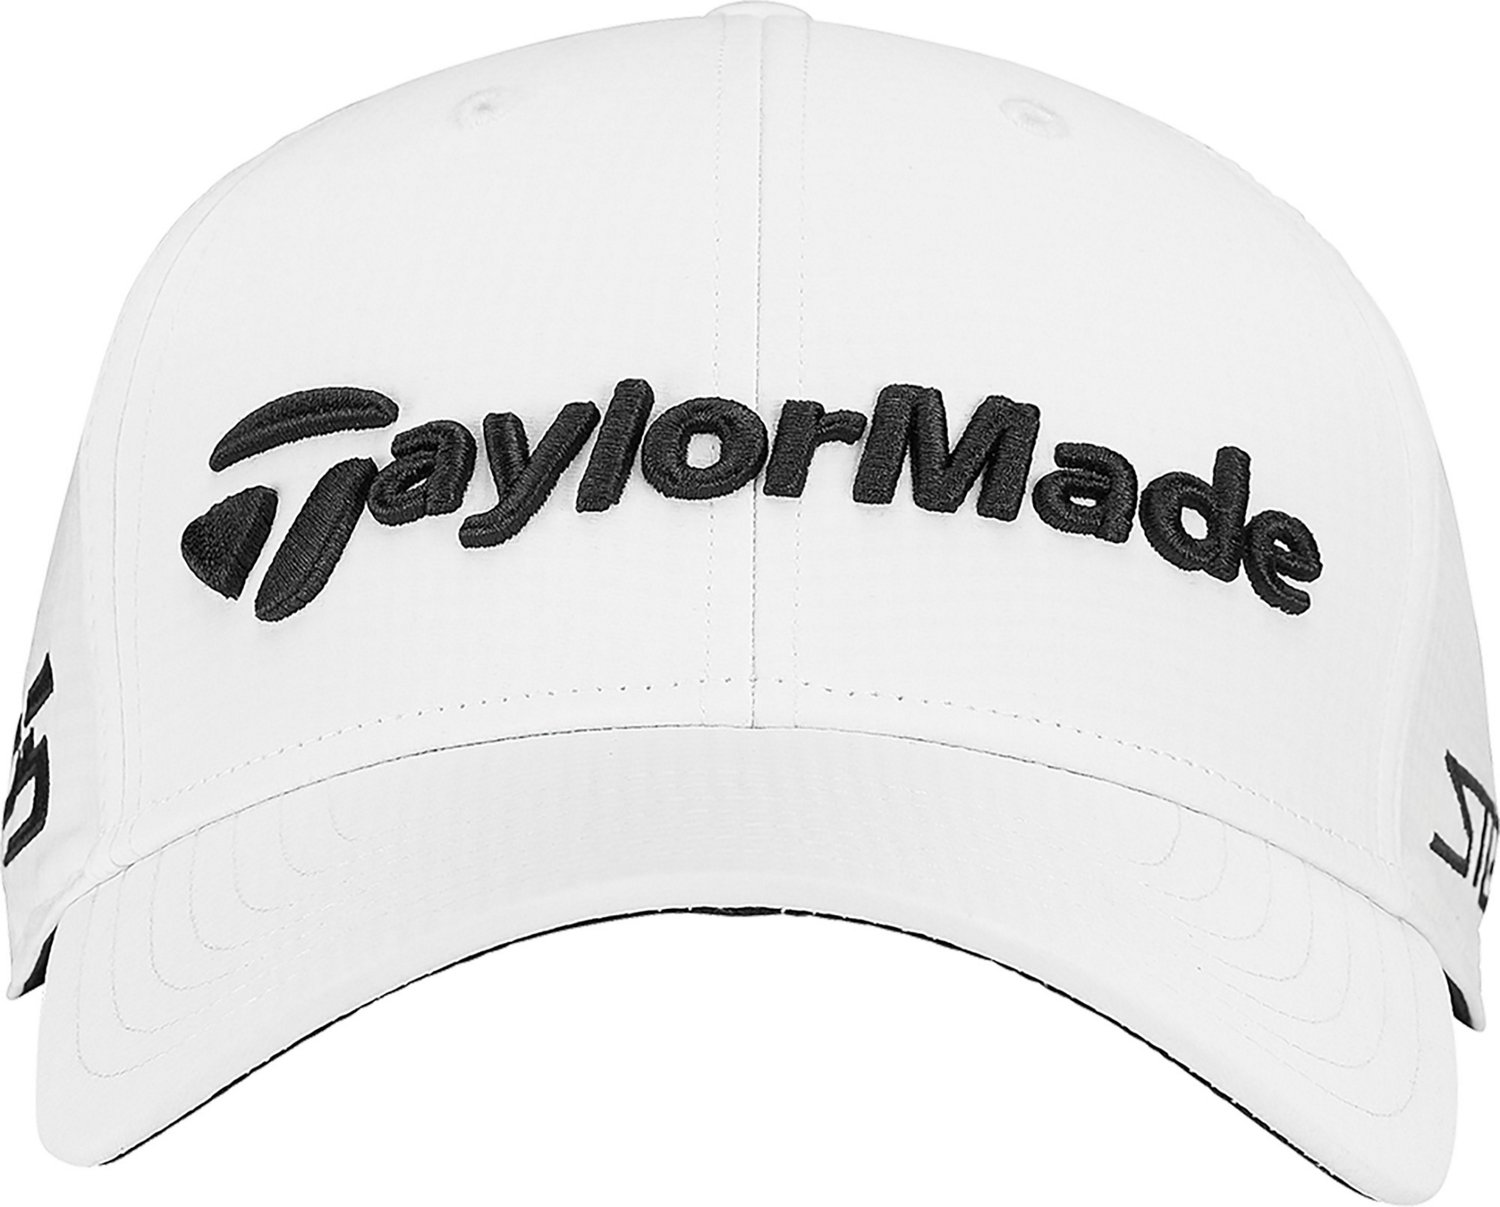 TaylorMade Adults Tour Radar Golf Hat